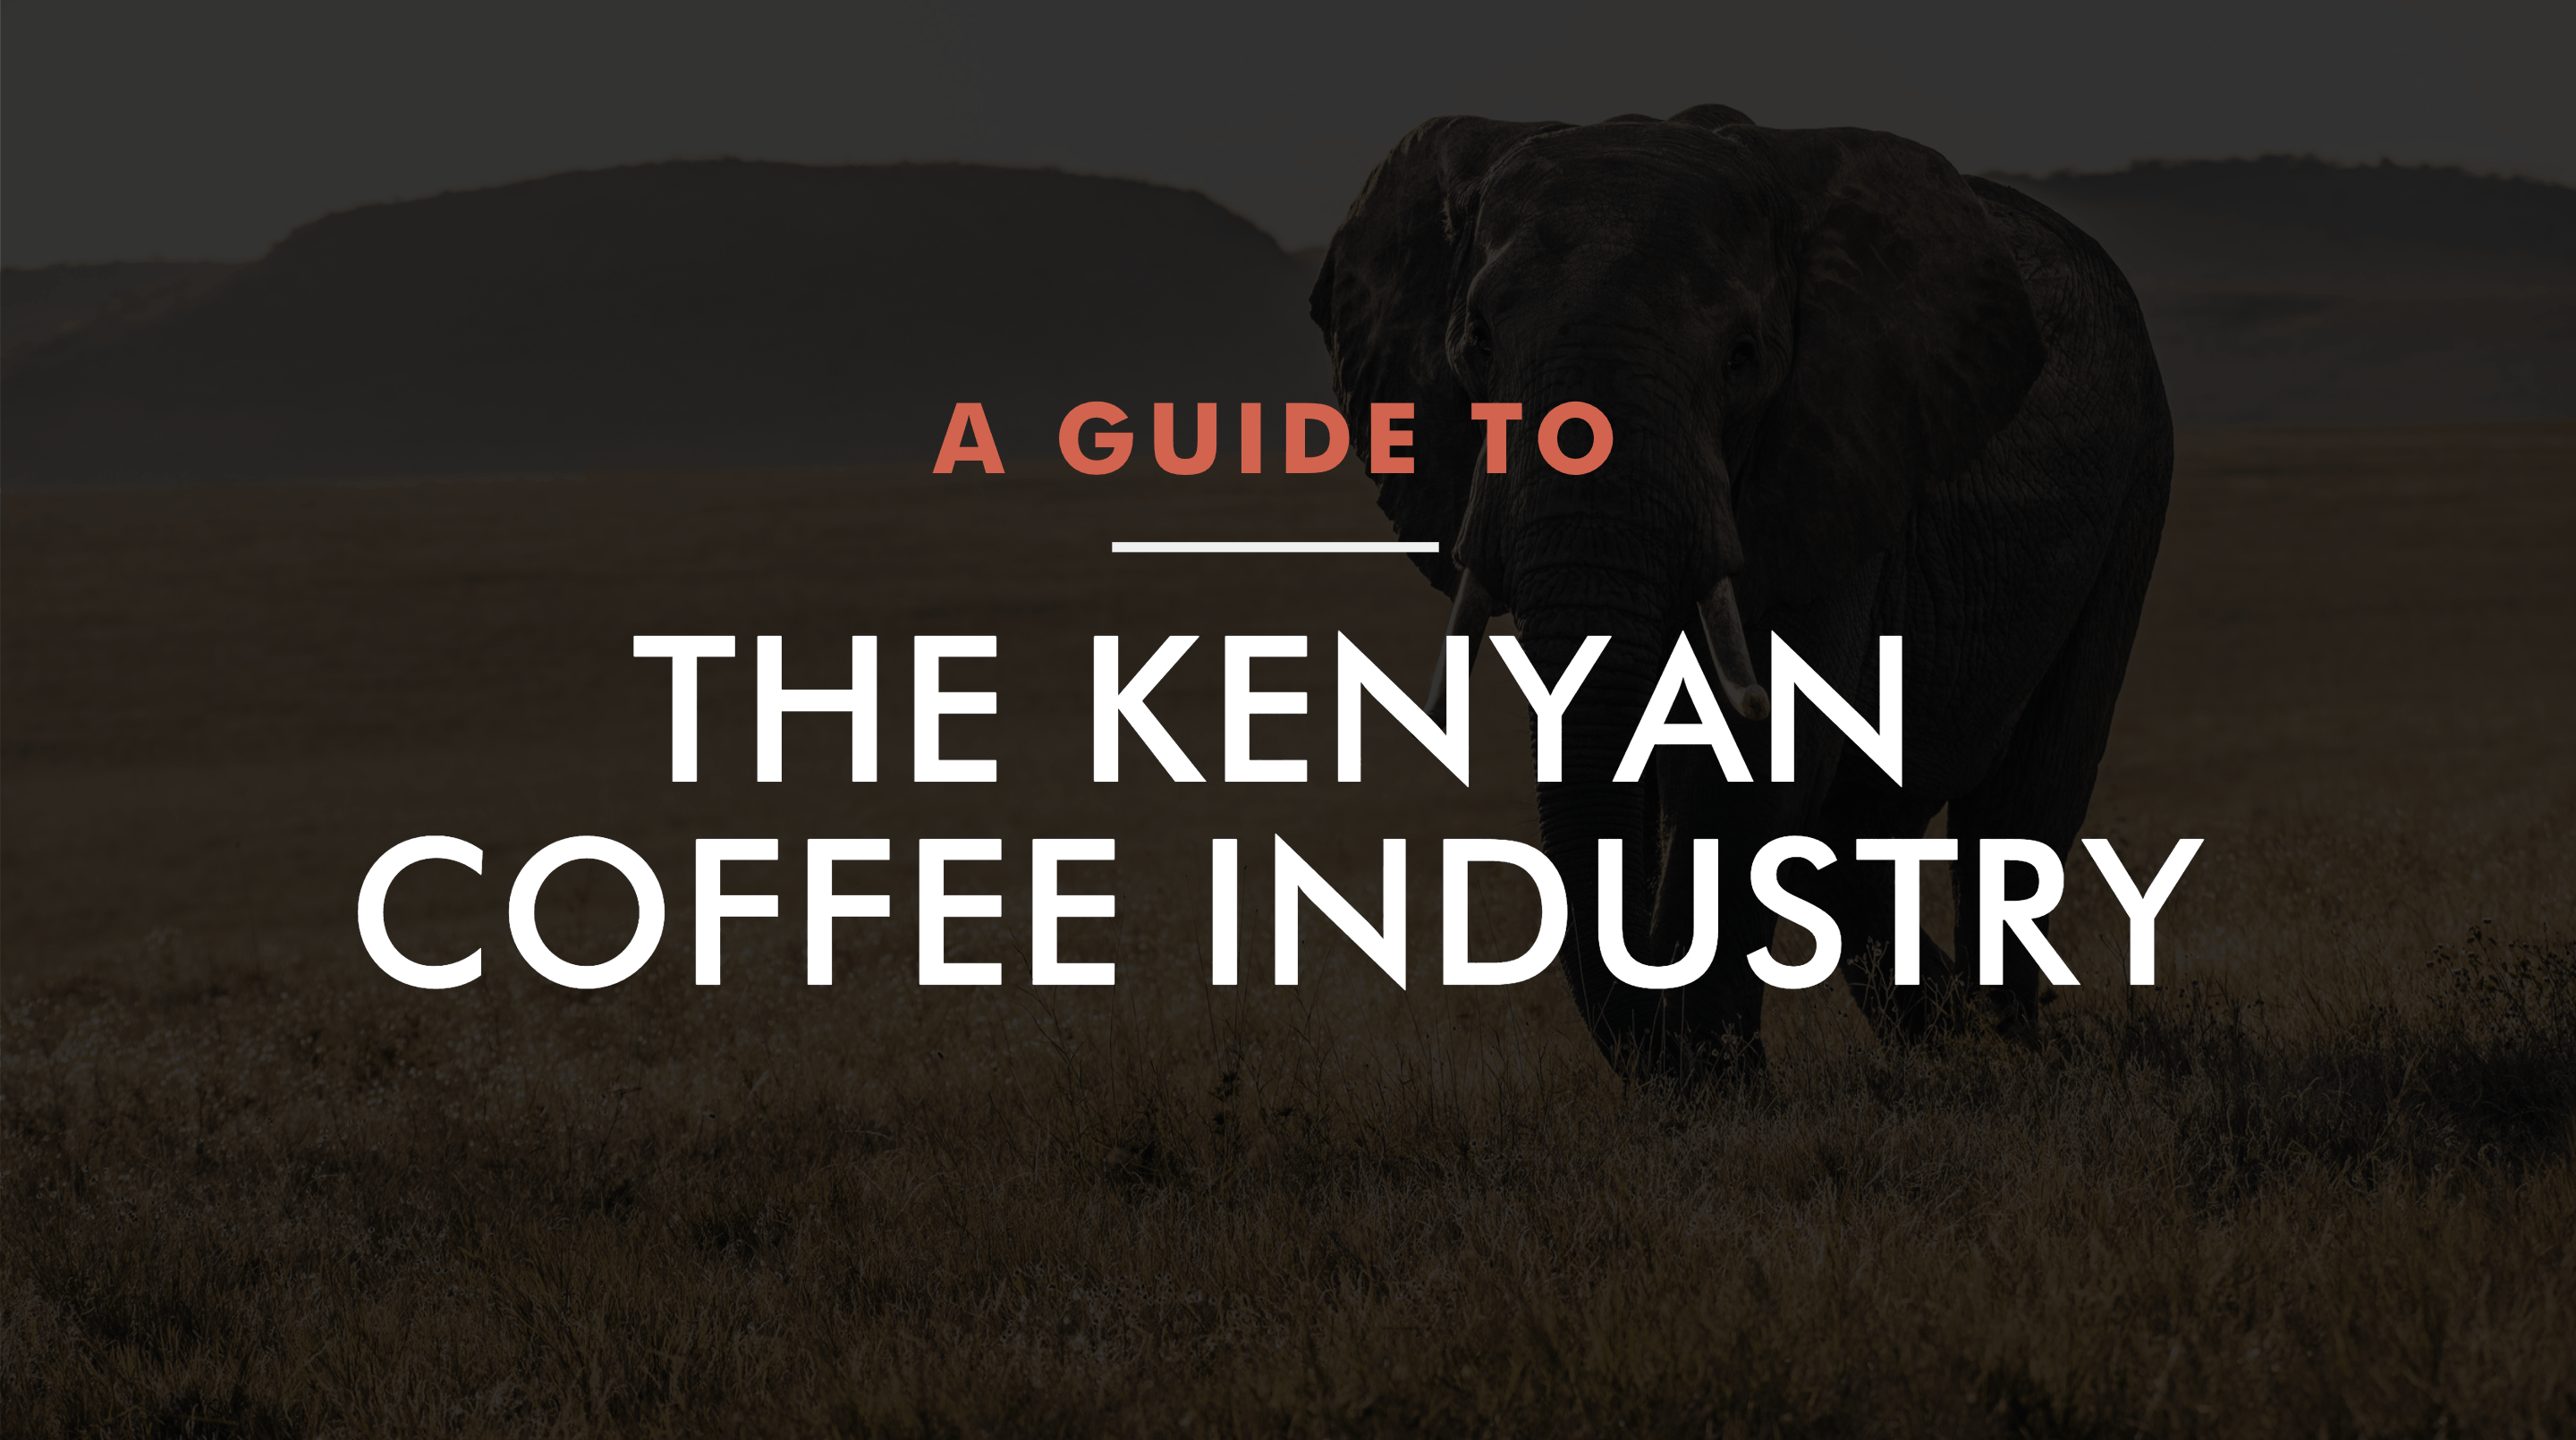 The Kenyan Coffee Industry